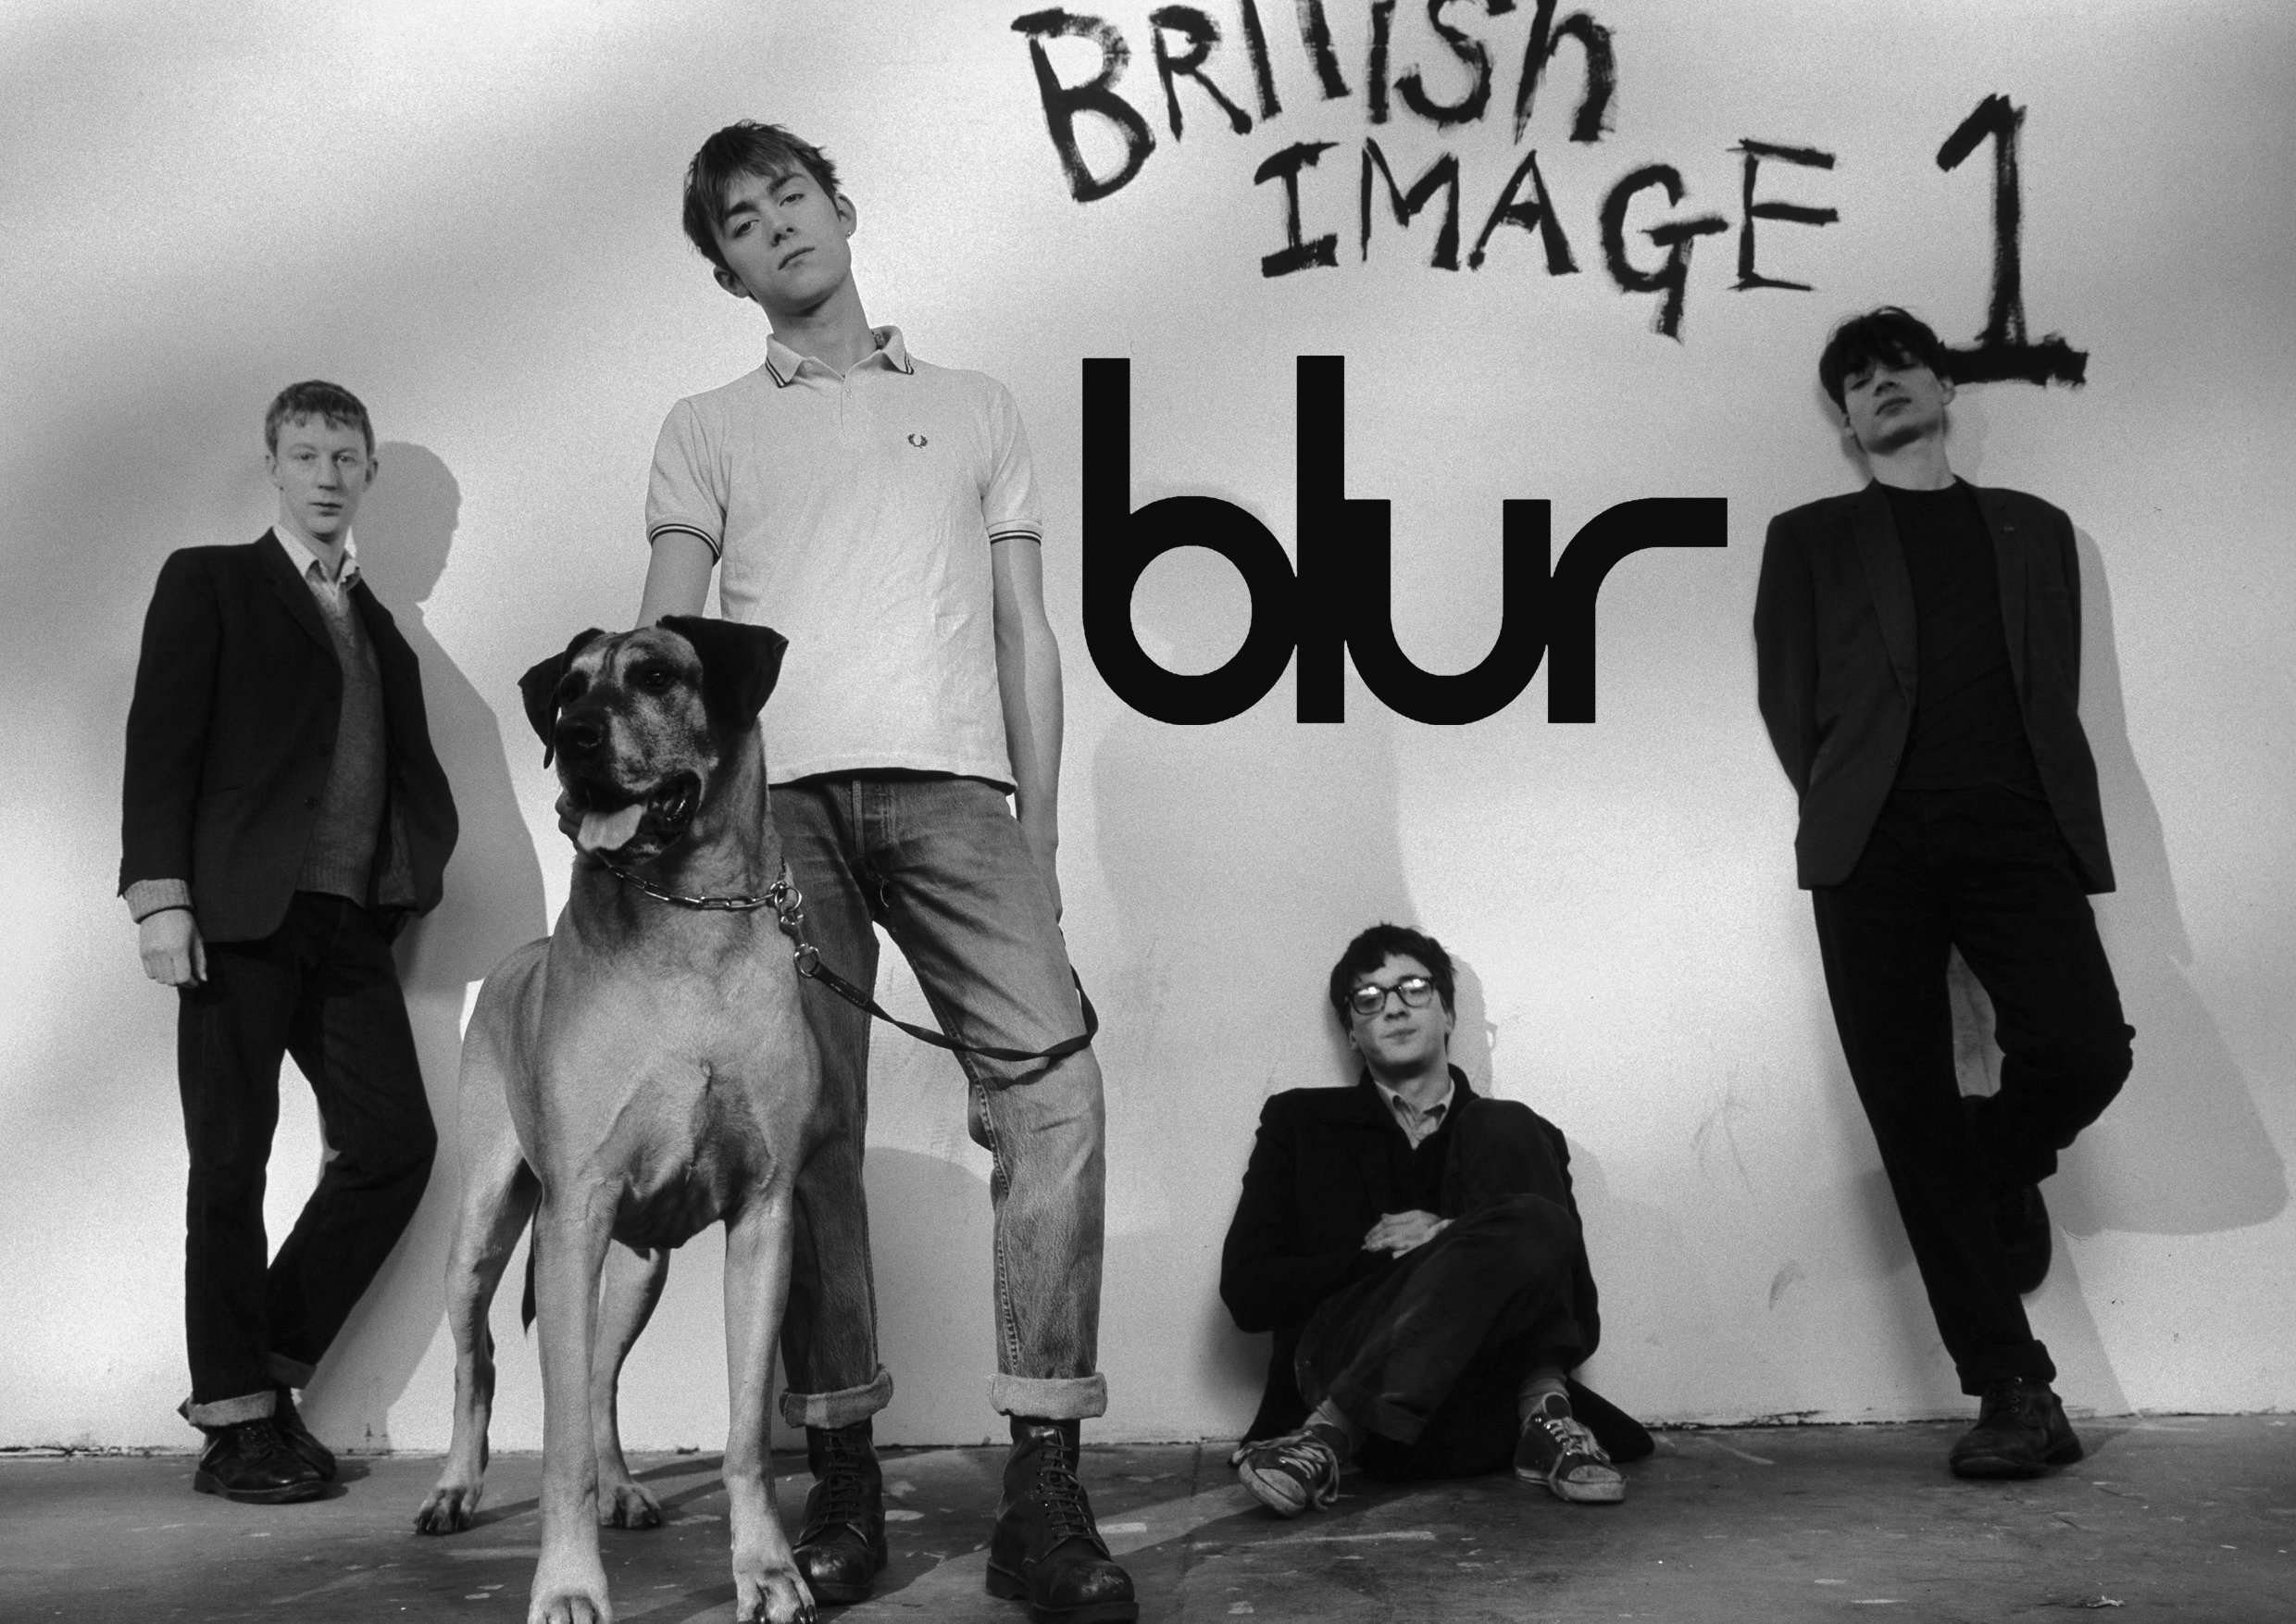 Music Band: Blur #10, British image 1, 90s indi artists, Damon Albarn, An English rock ensemble formed in London. 2480x1760 HD Wallpaper.